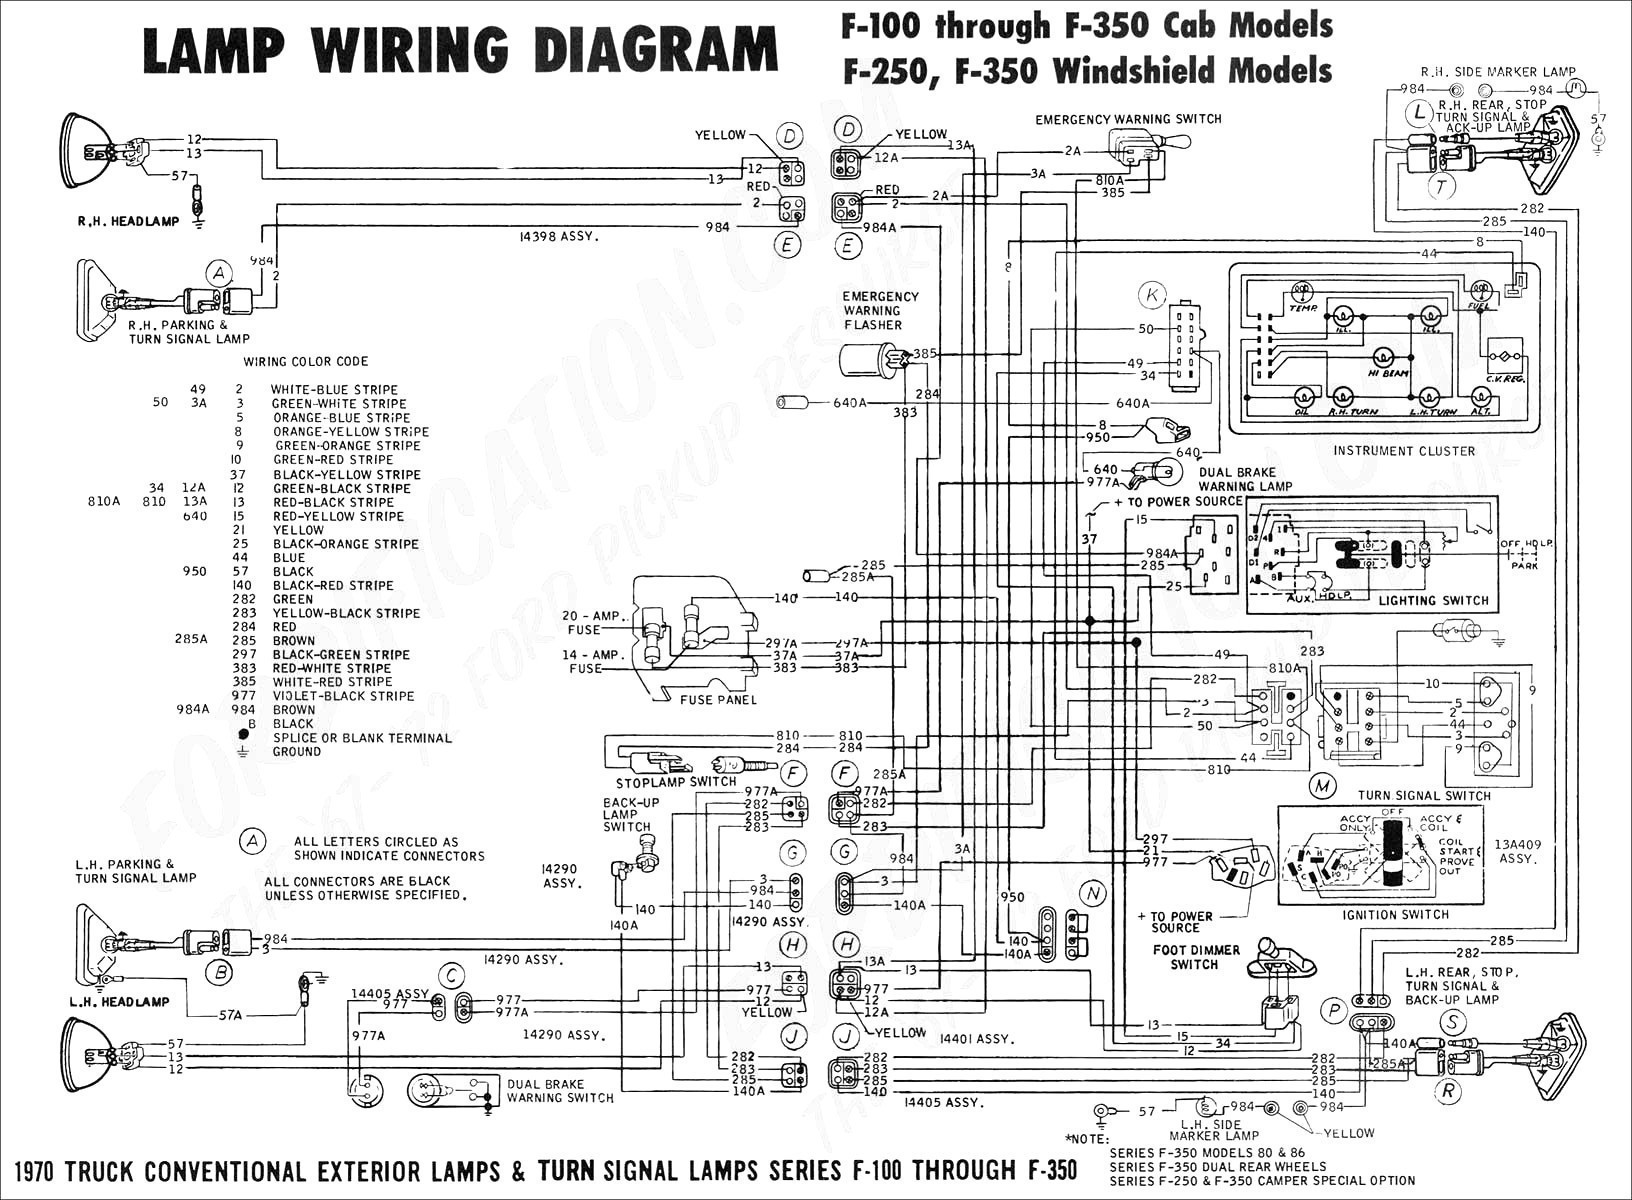 Isuzu Trooper Engine Diagram Xy Alternator Wiring Diagram New isuzu Npr Alternator Wiring Diagram Of Isuzu Trooper Engine Diagram